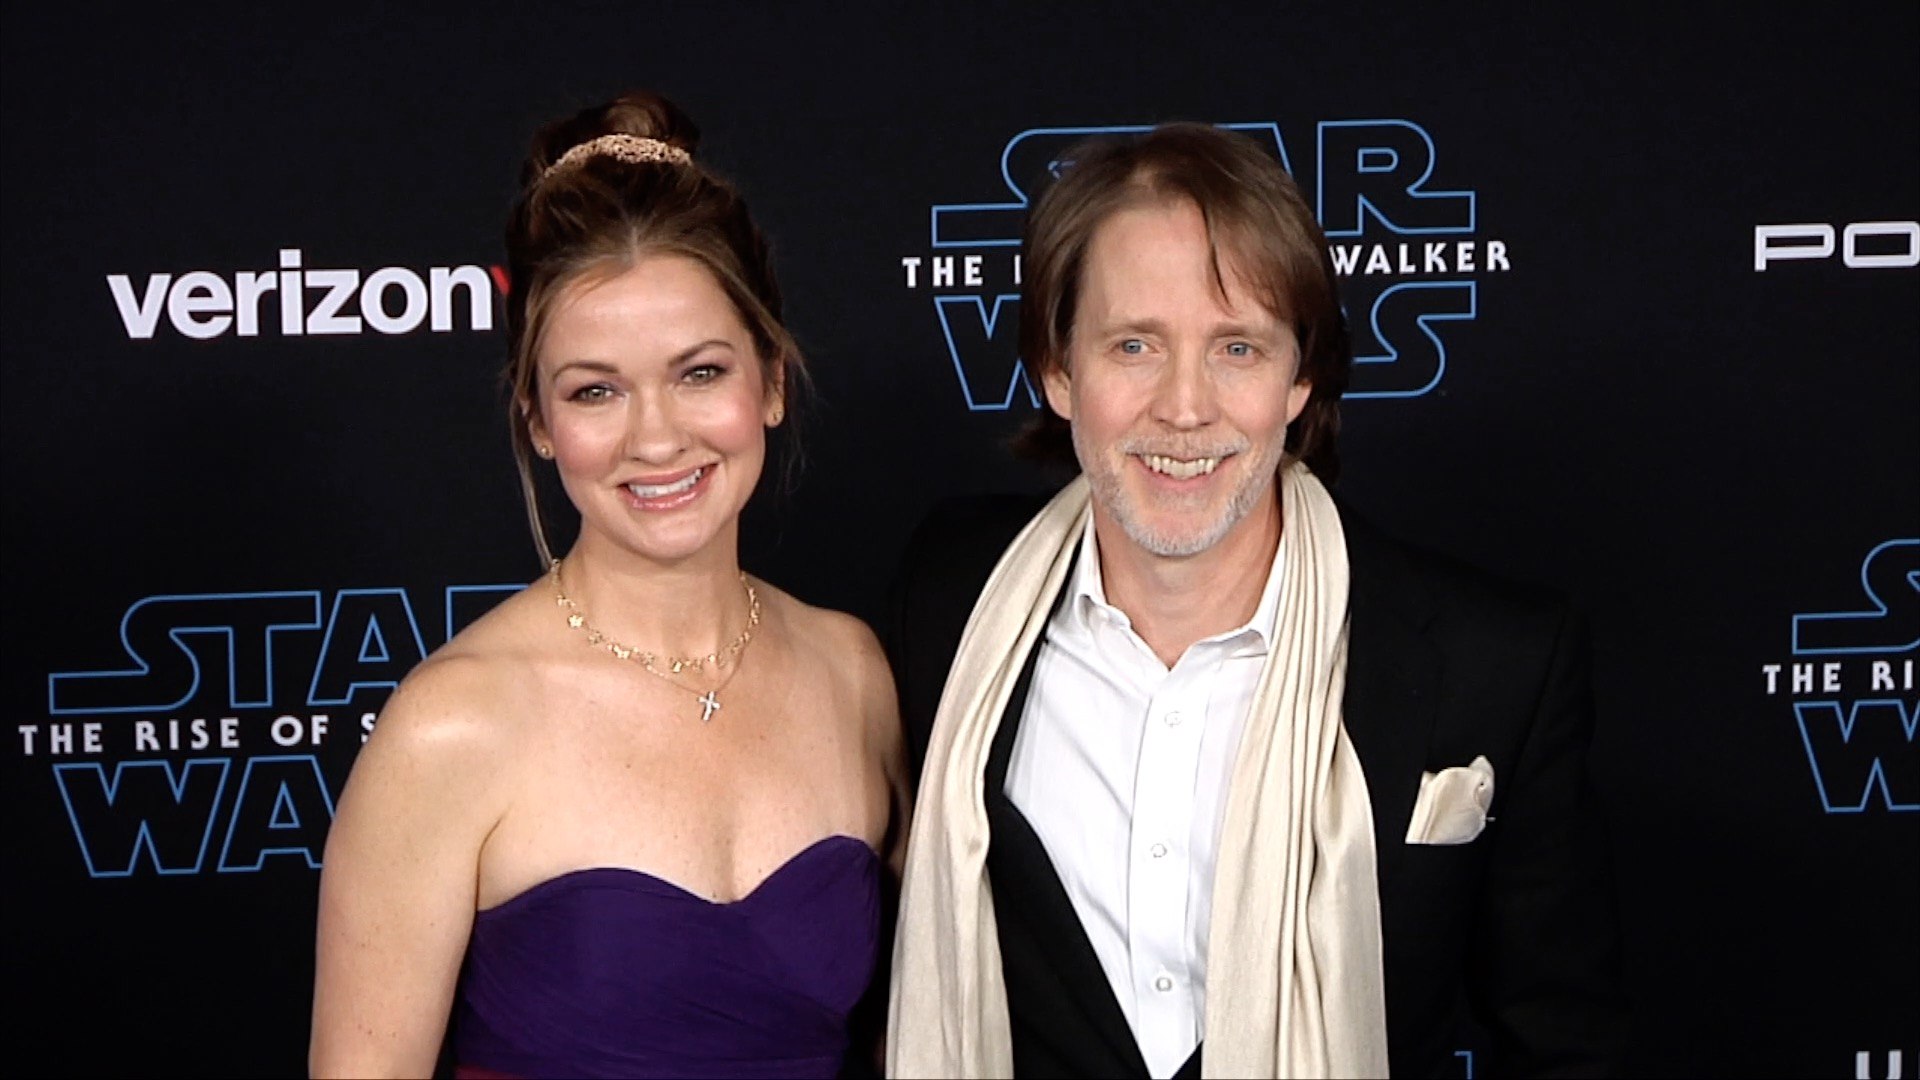 Star Wars: The Rise of Skywalker Premiere